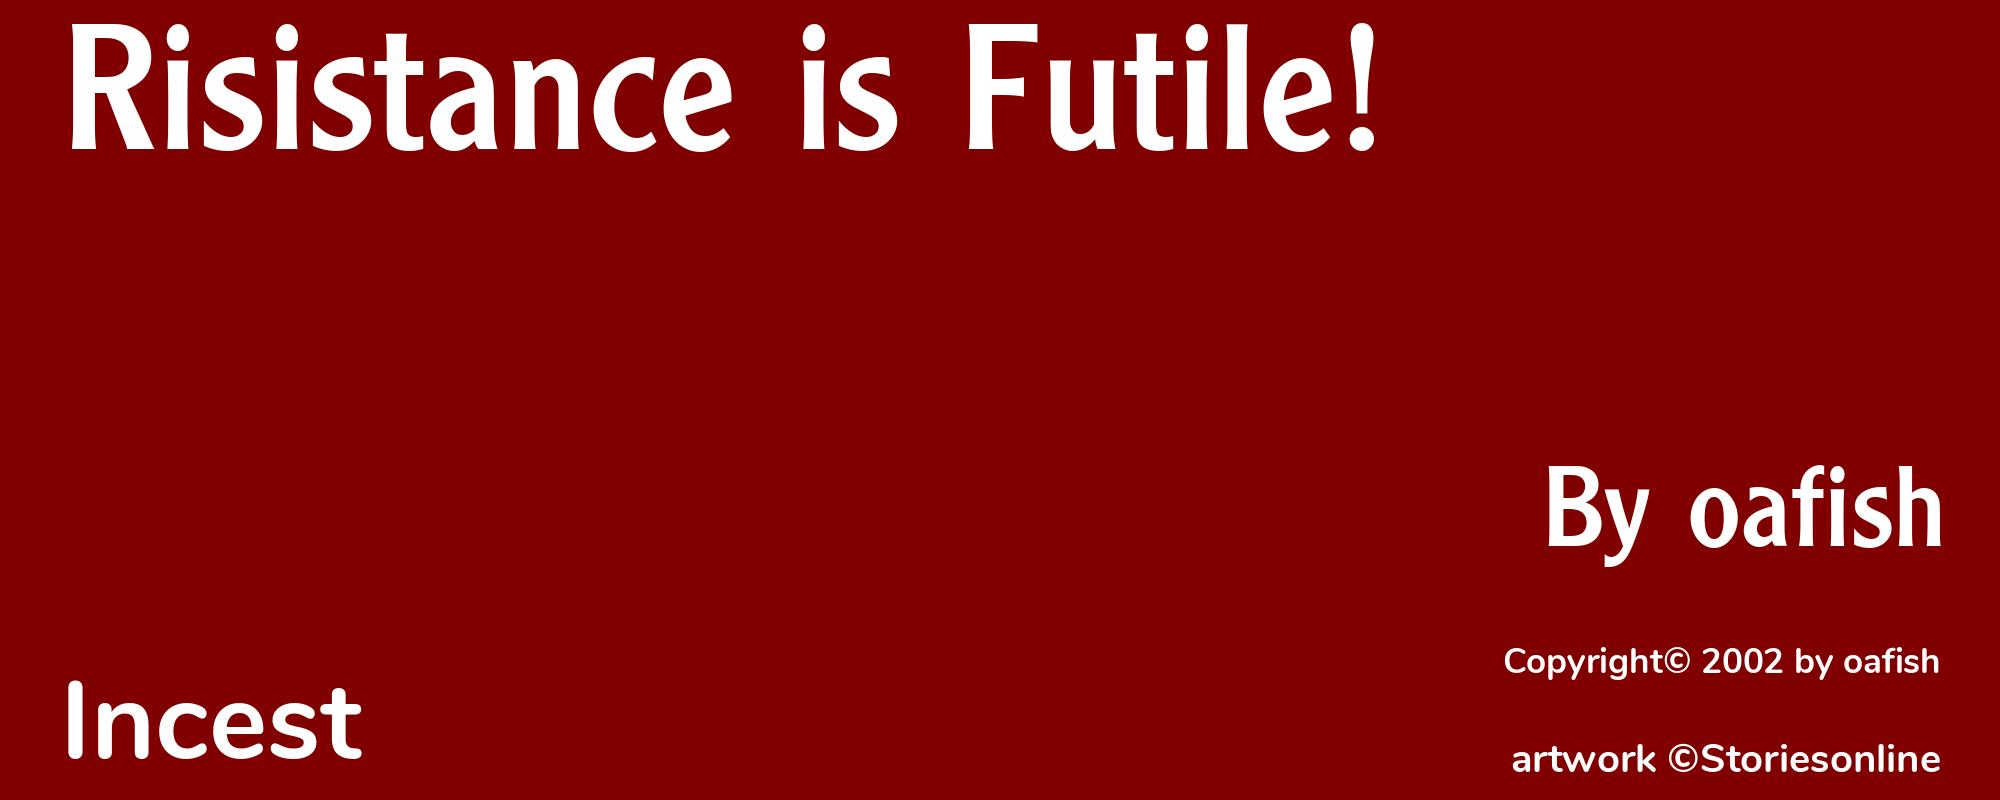 Risistance is Futile! - Cover